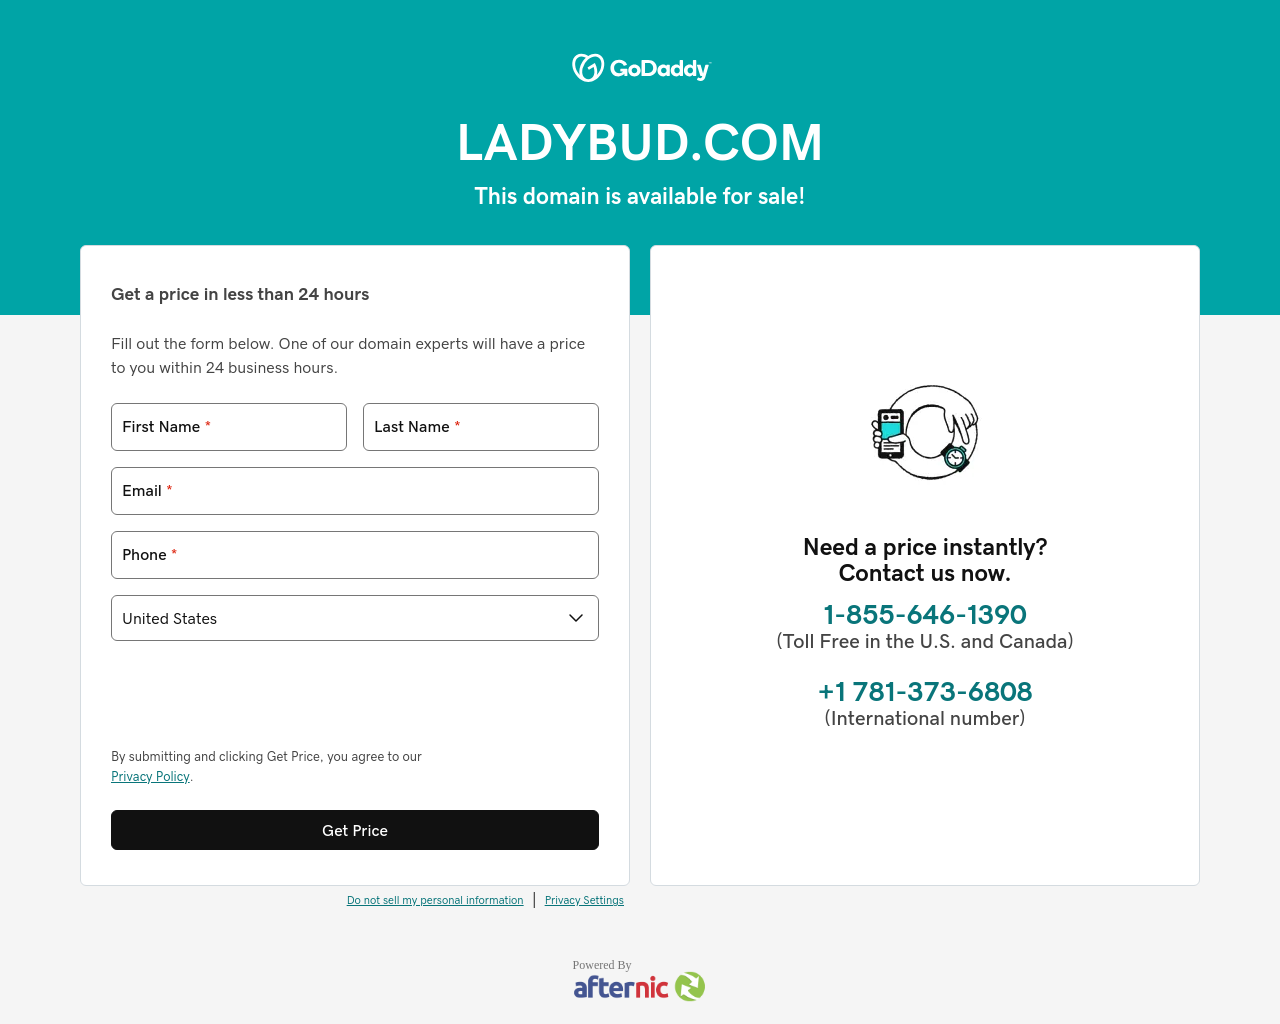 ladybud.com